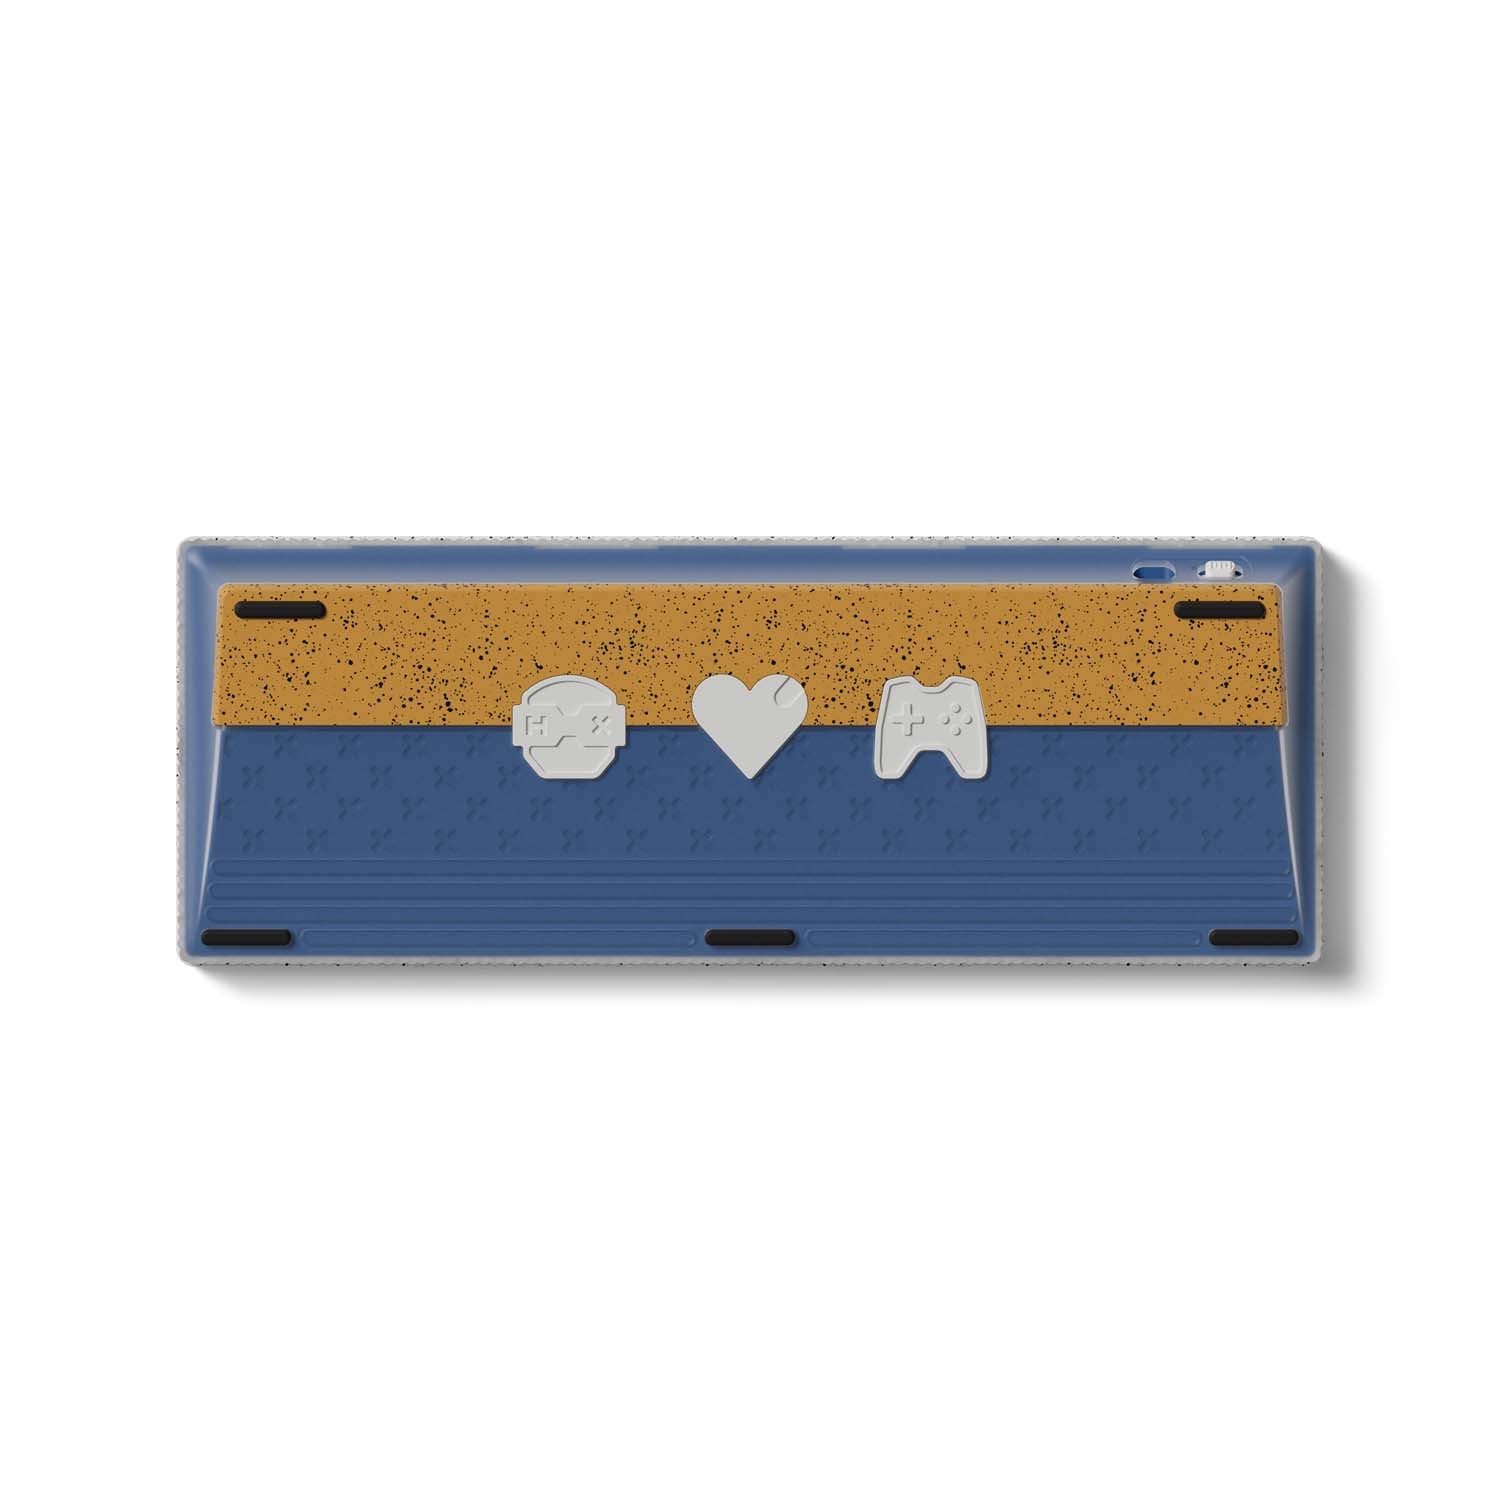 MelGeek Modern97 Ocean Work&Game Compact Mechanical Keyboard